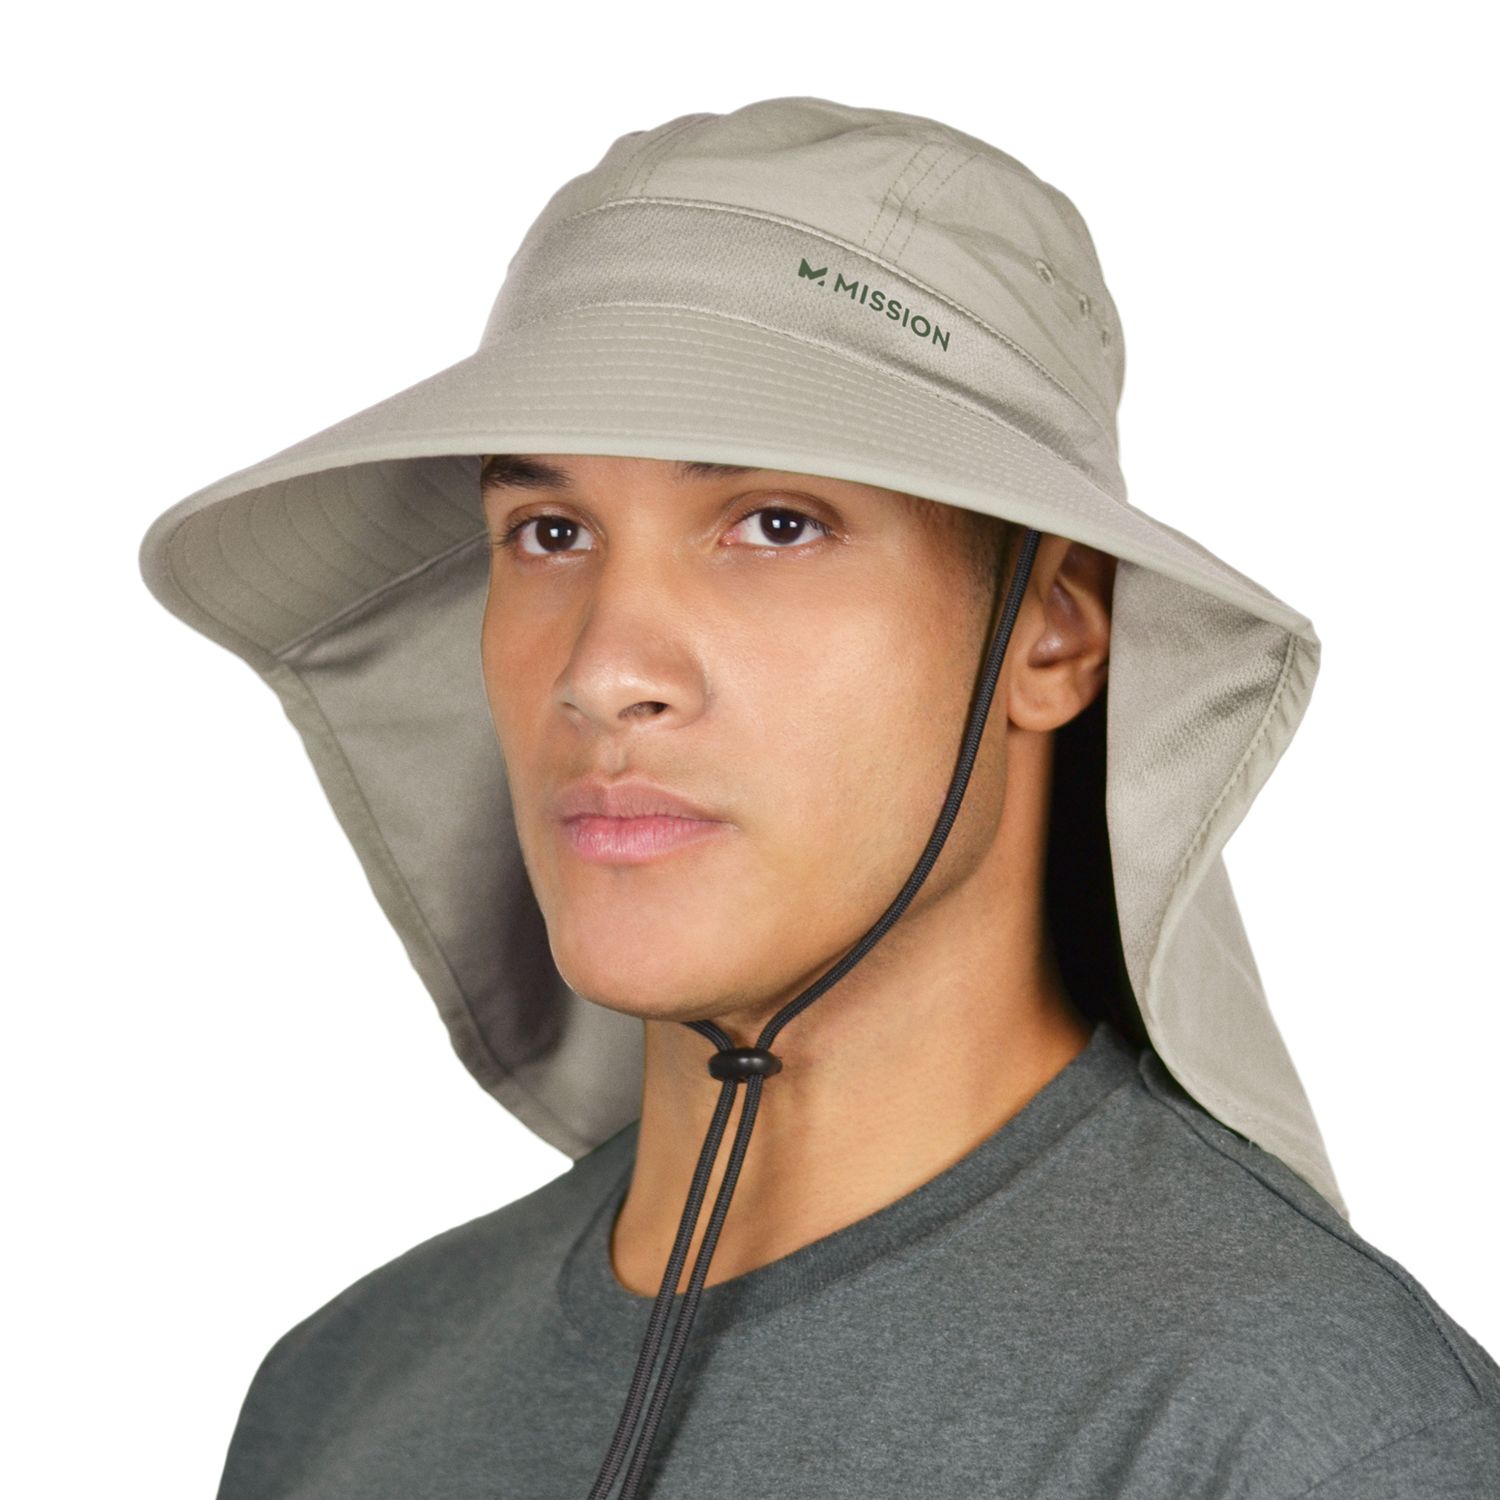 Mission MISSION Sun Defender Cooling Neck Guard, Wide Brim Hats for Women  and Men - Green